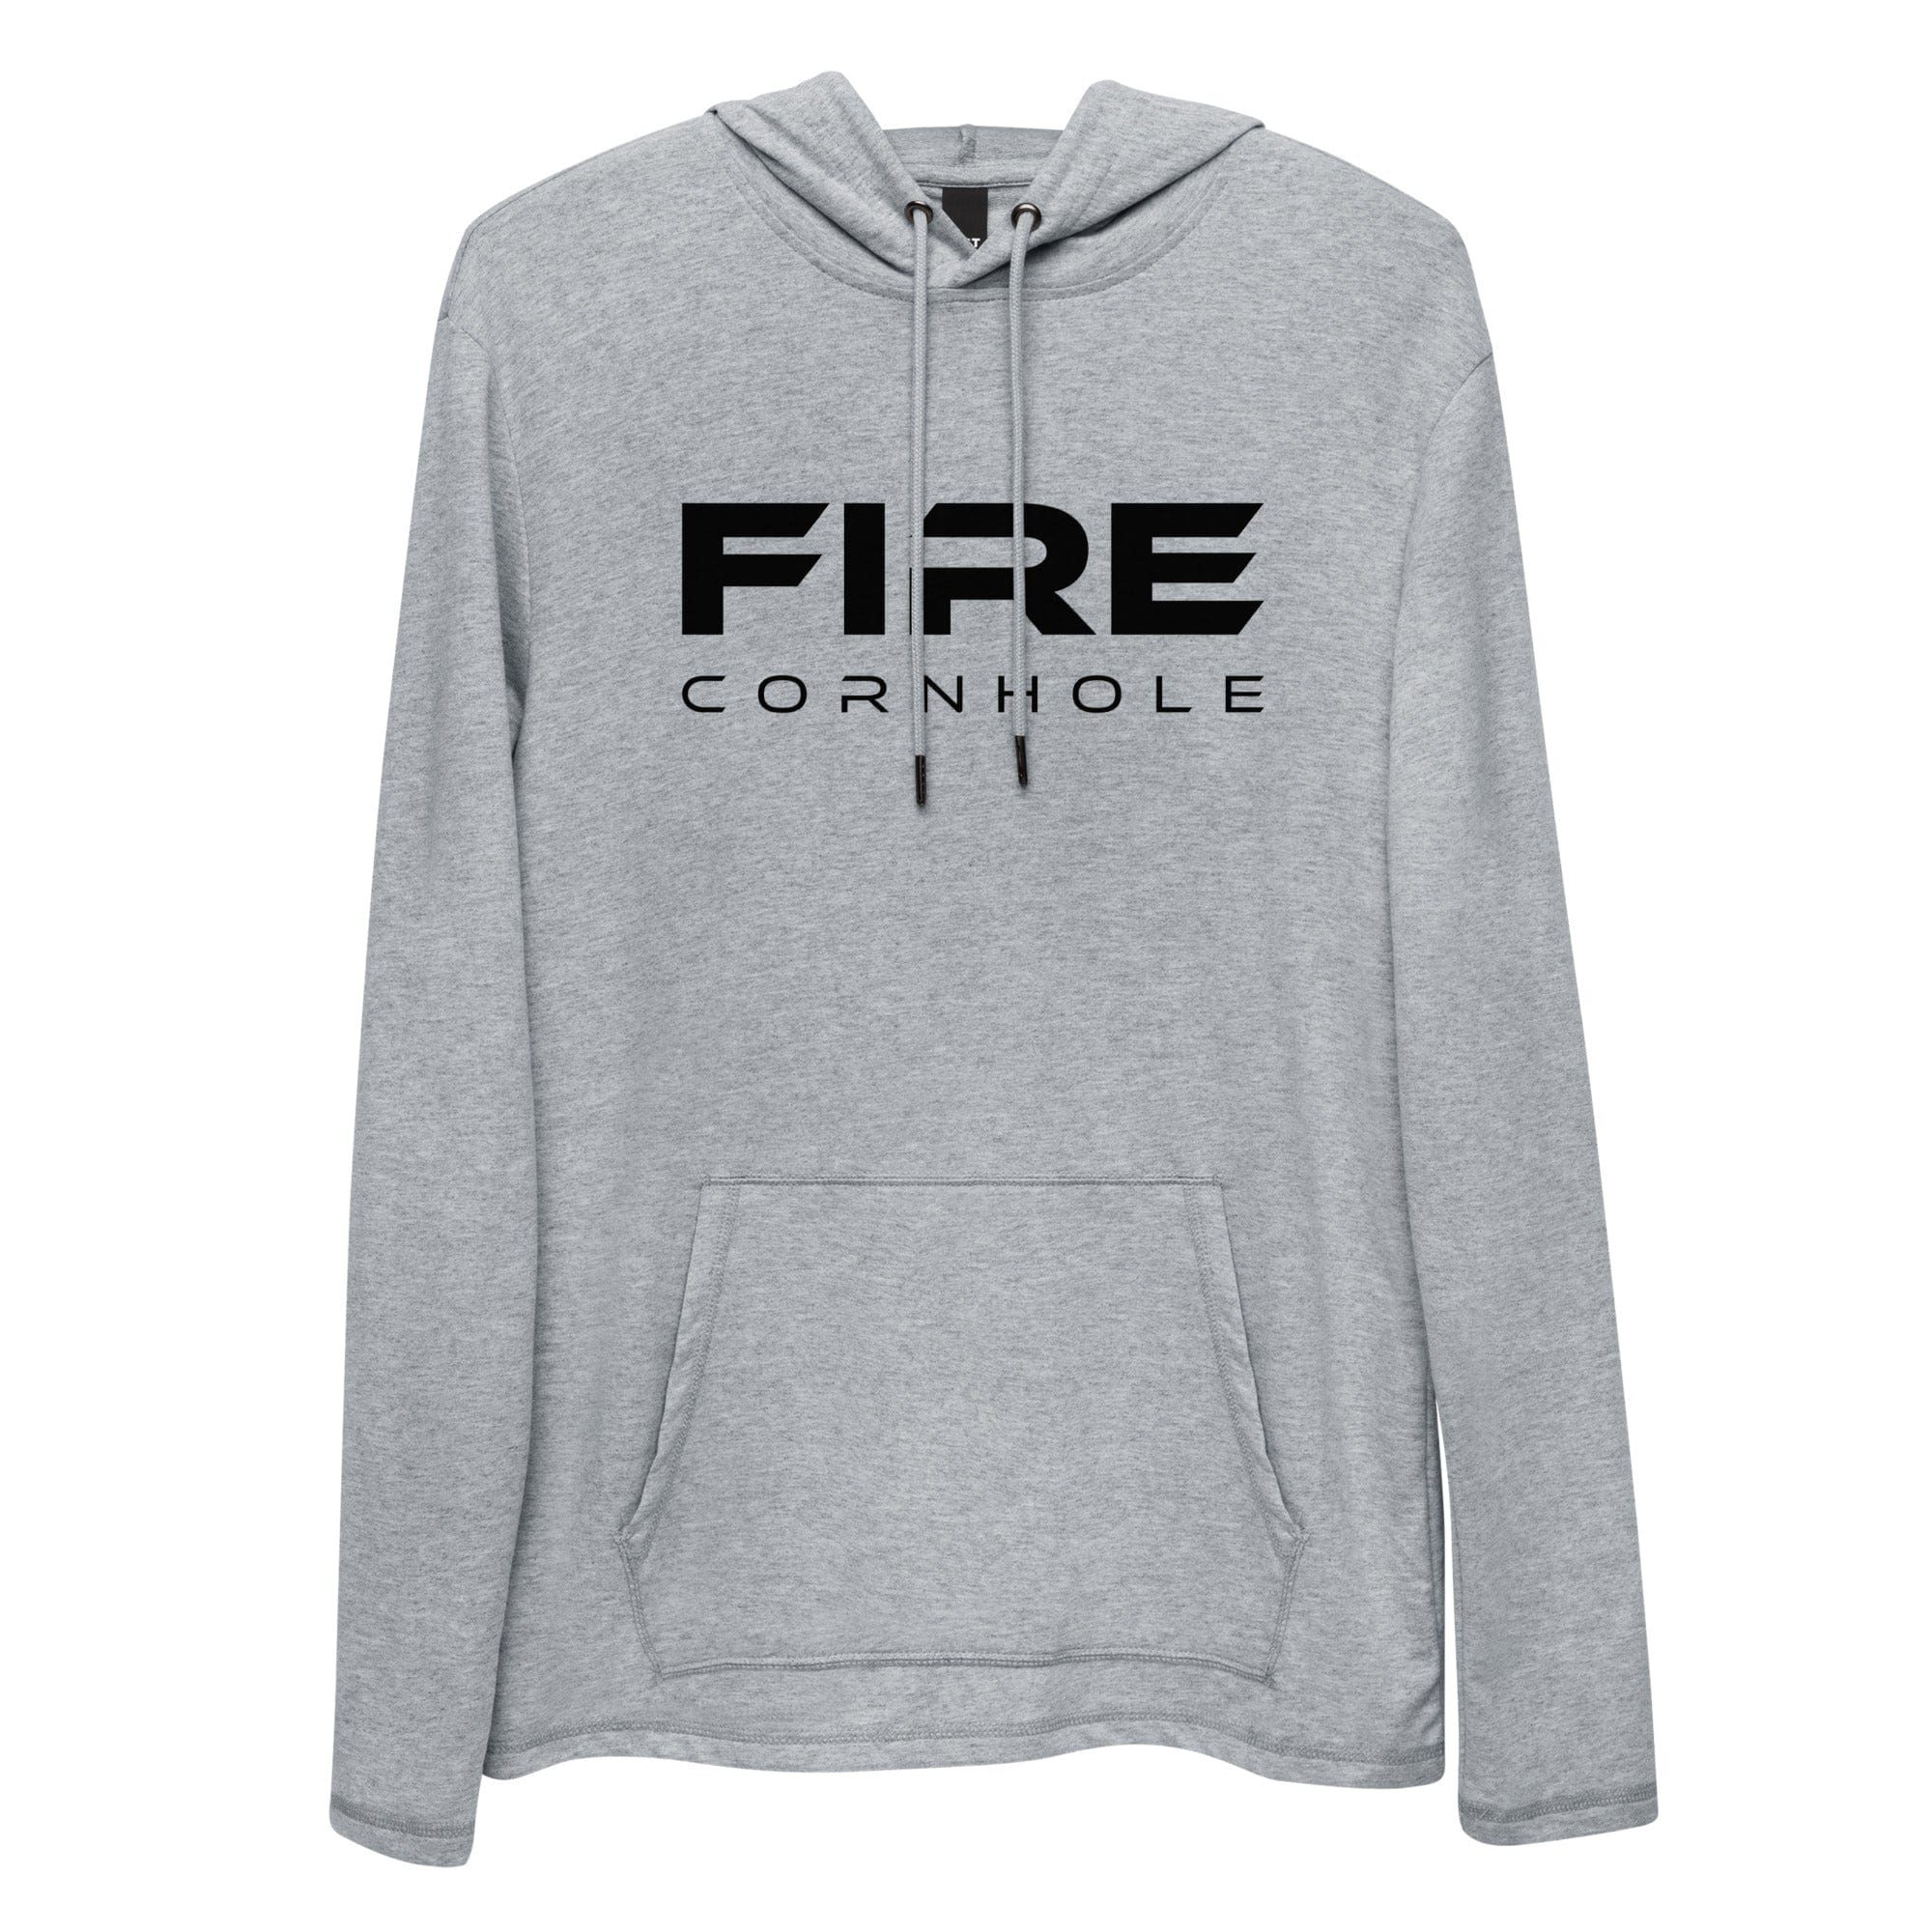 Heathered grey hooded longsleeve with black Fire Cornhole logo